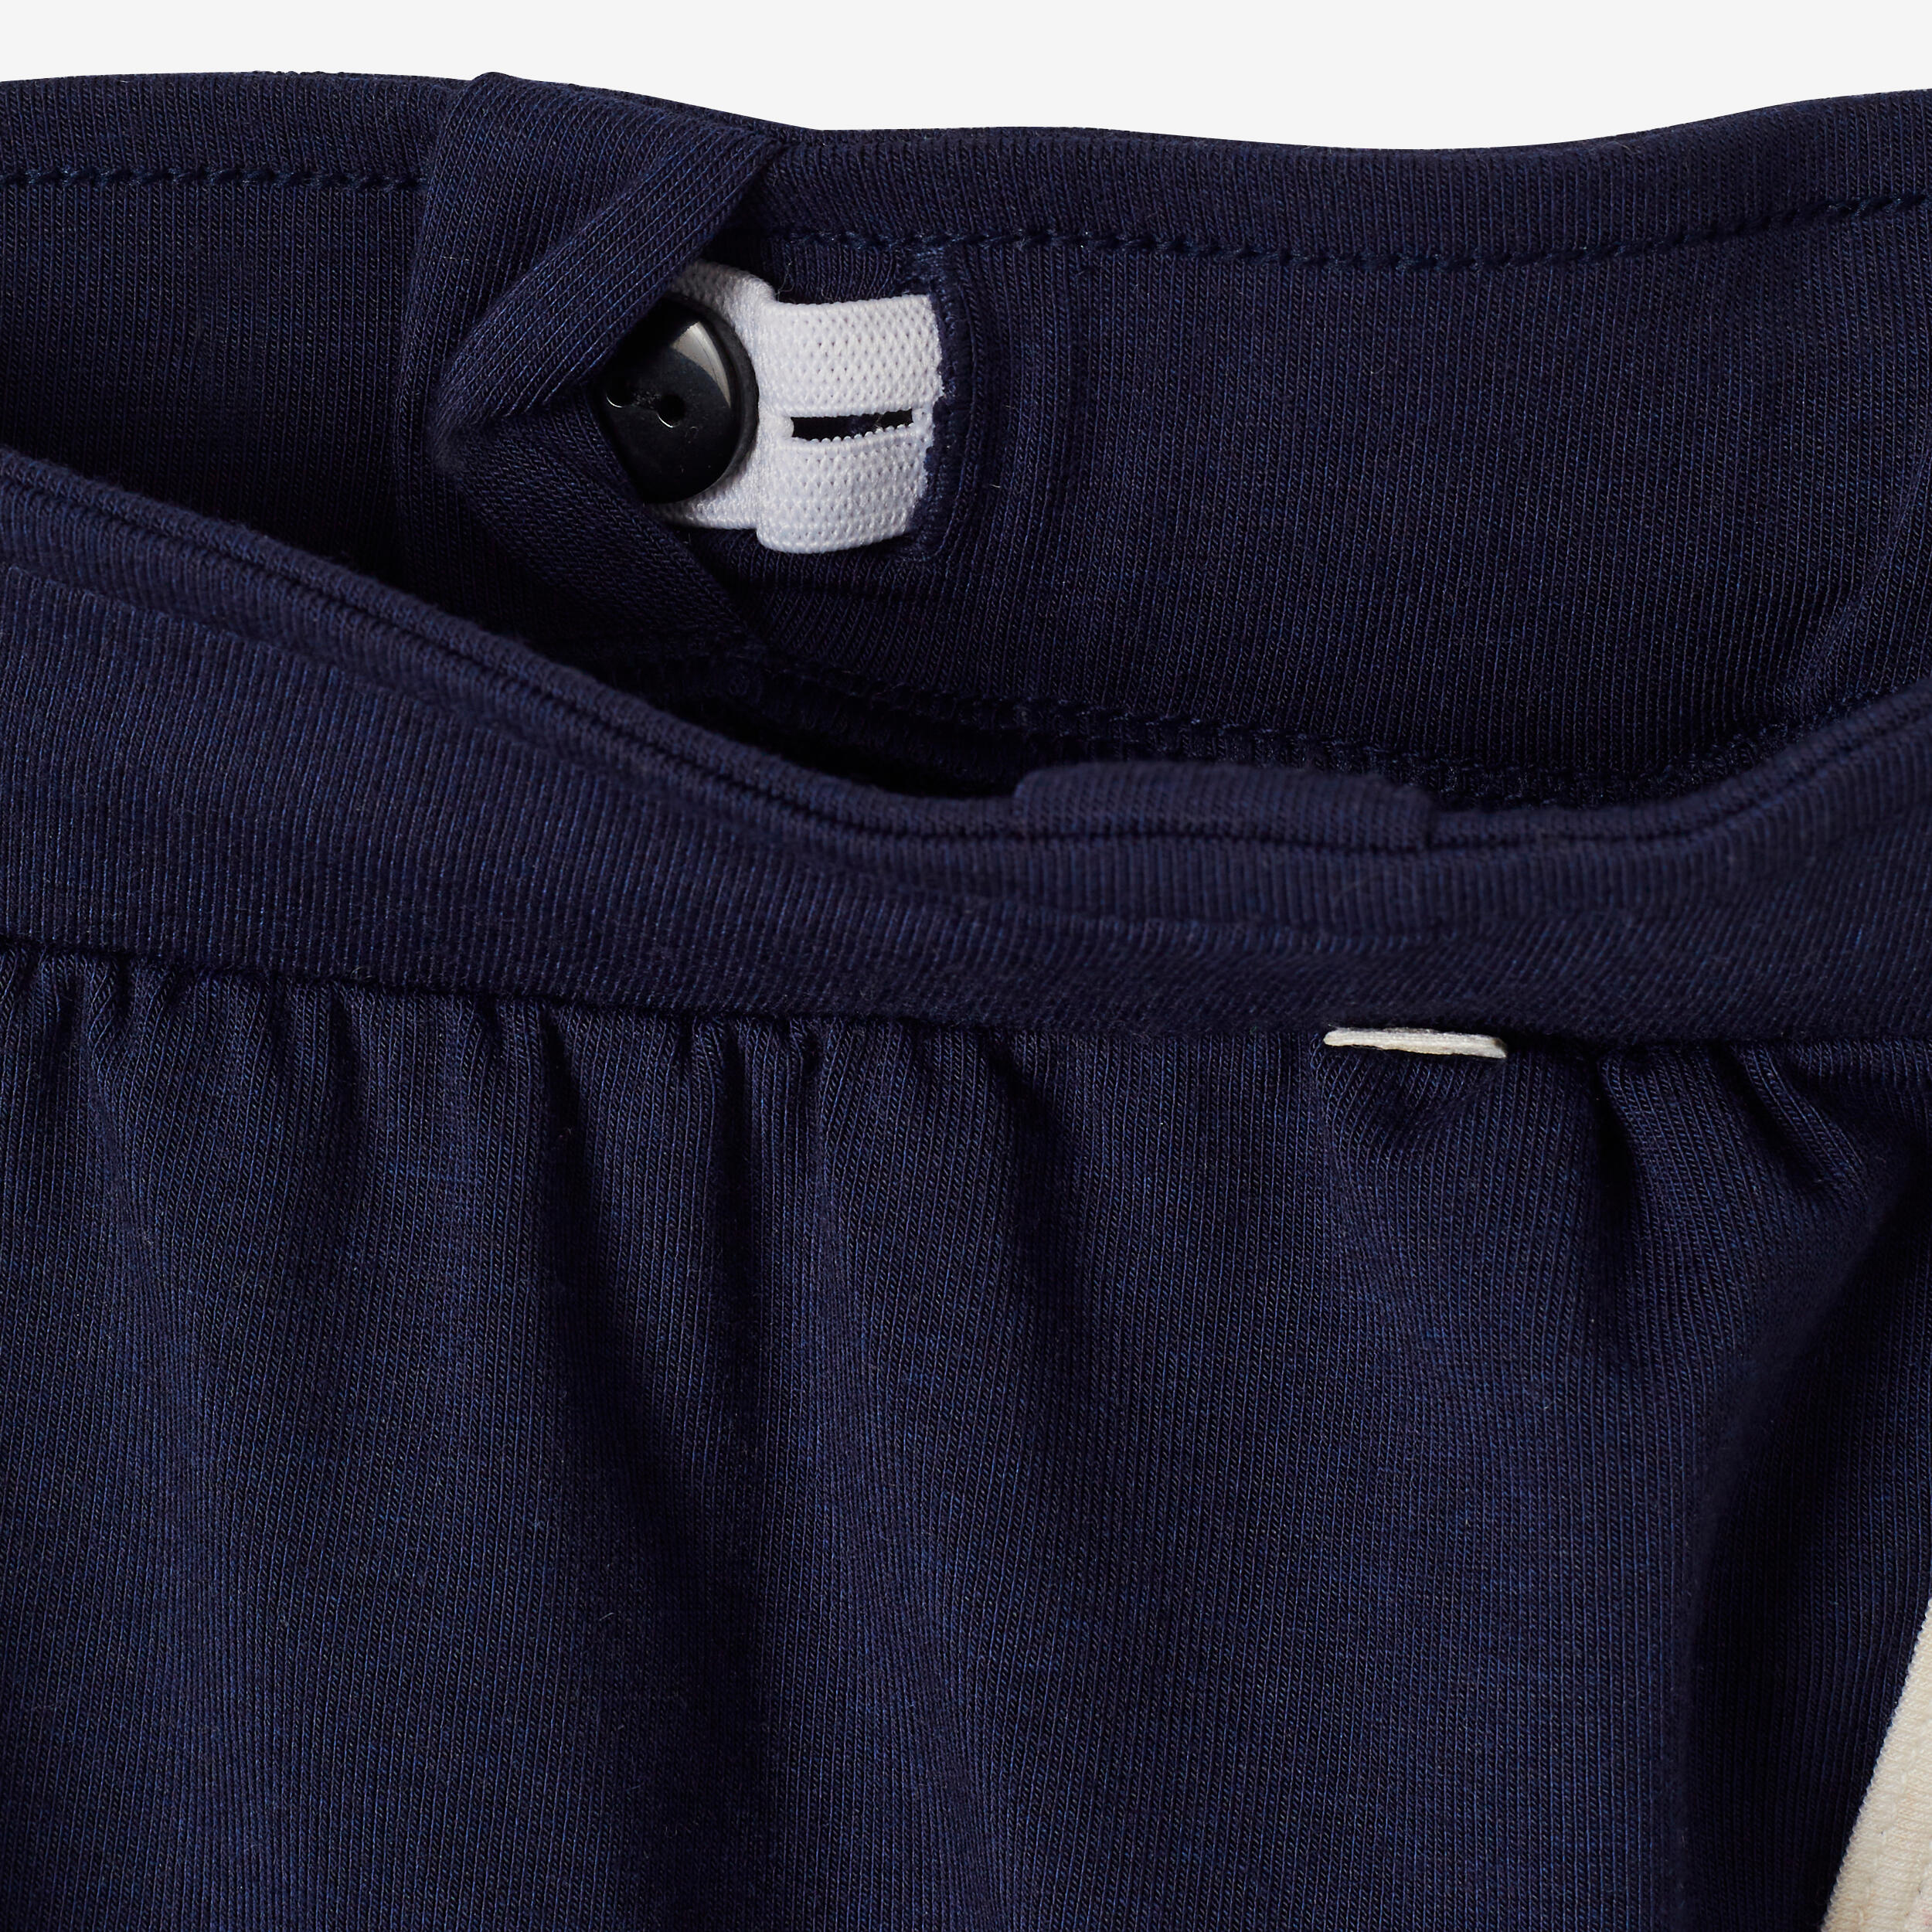 Kids' Breathable Adjustable Shorts 500 - Navy Blue 5/10